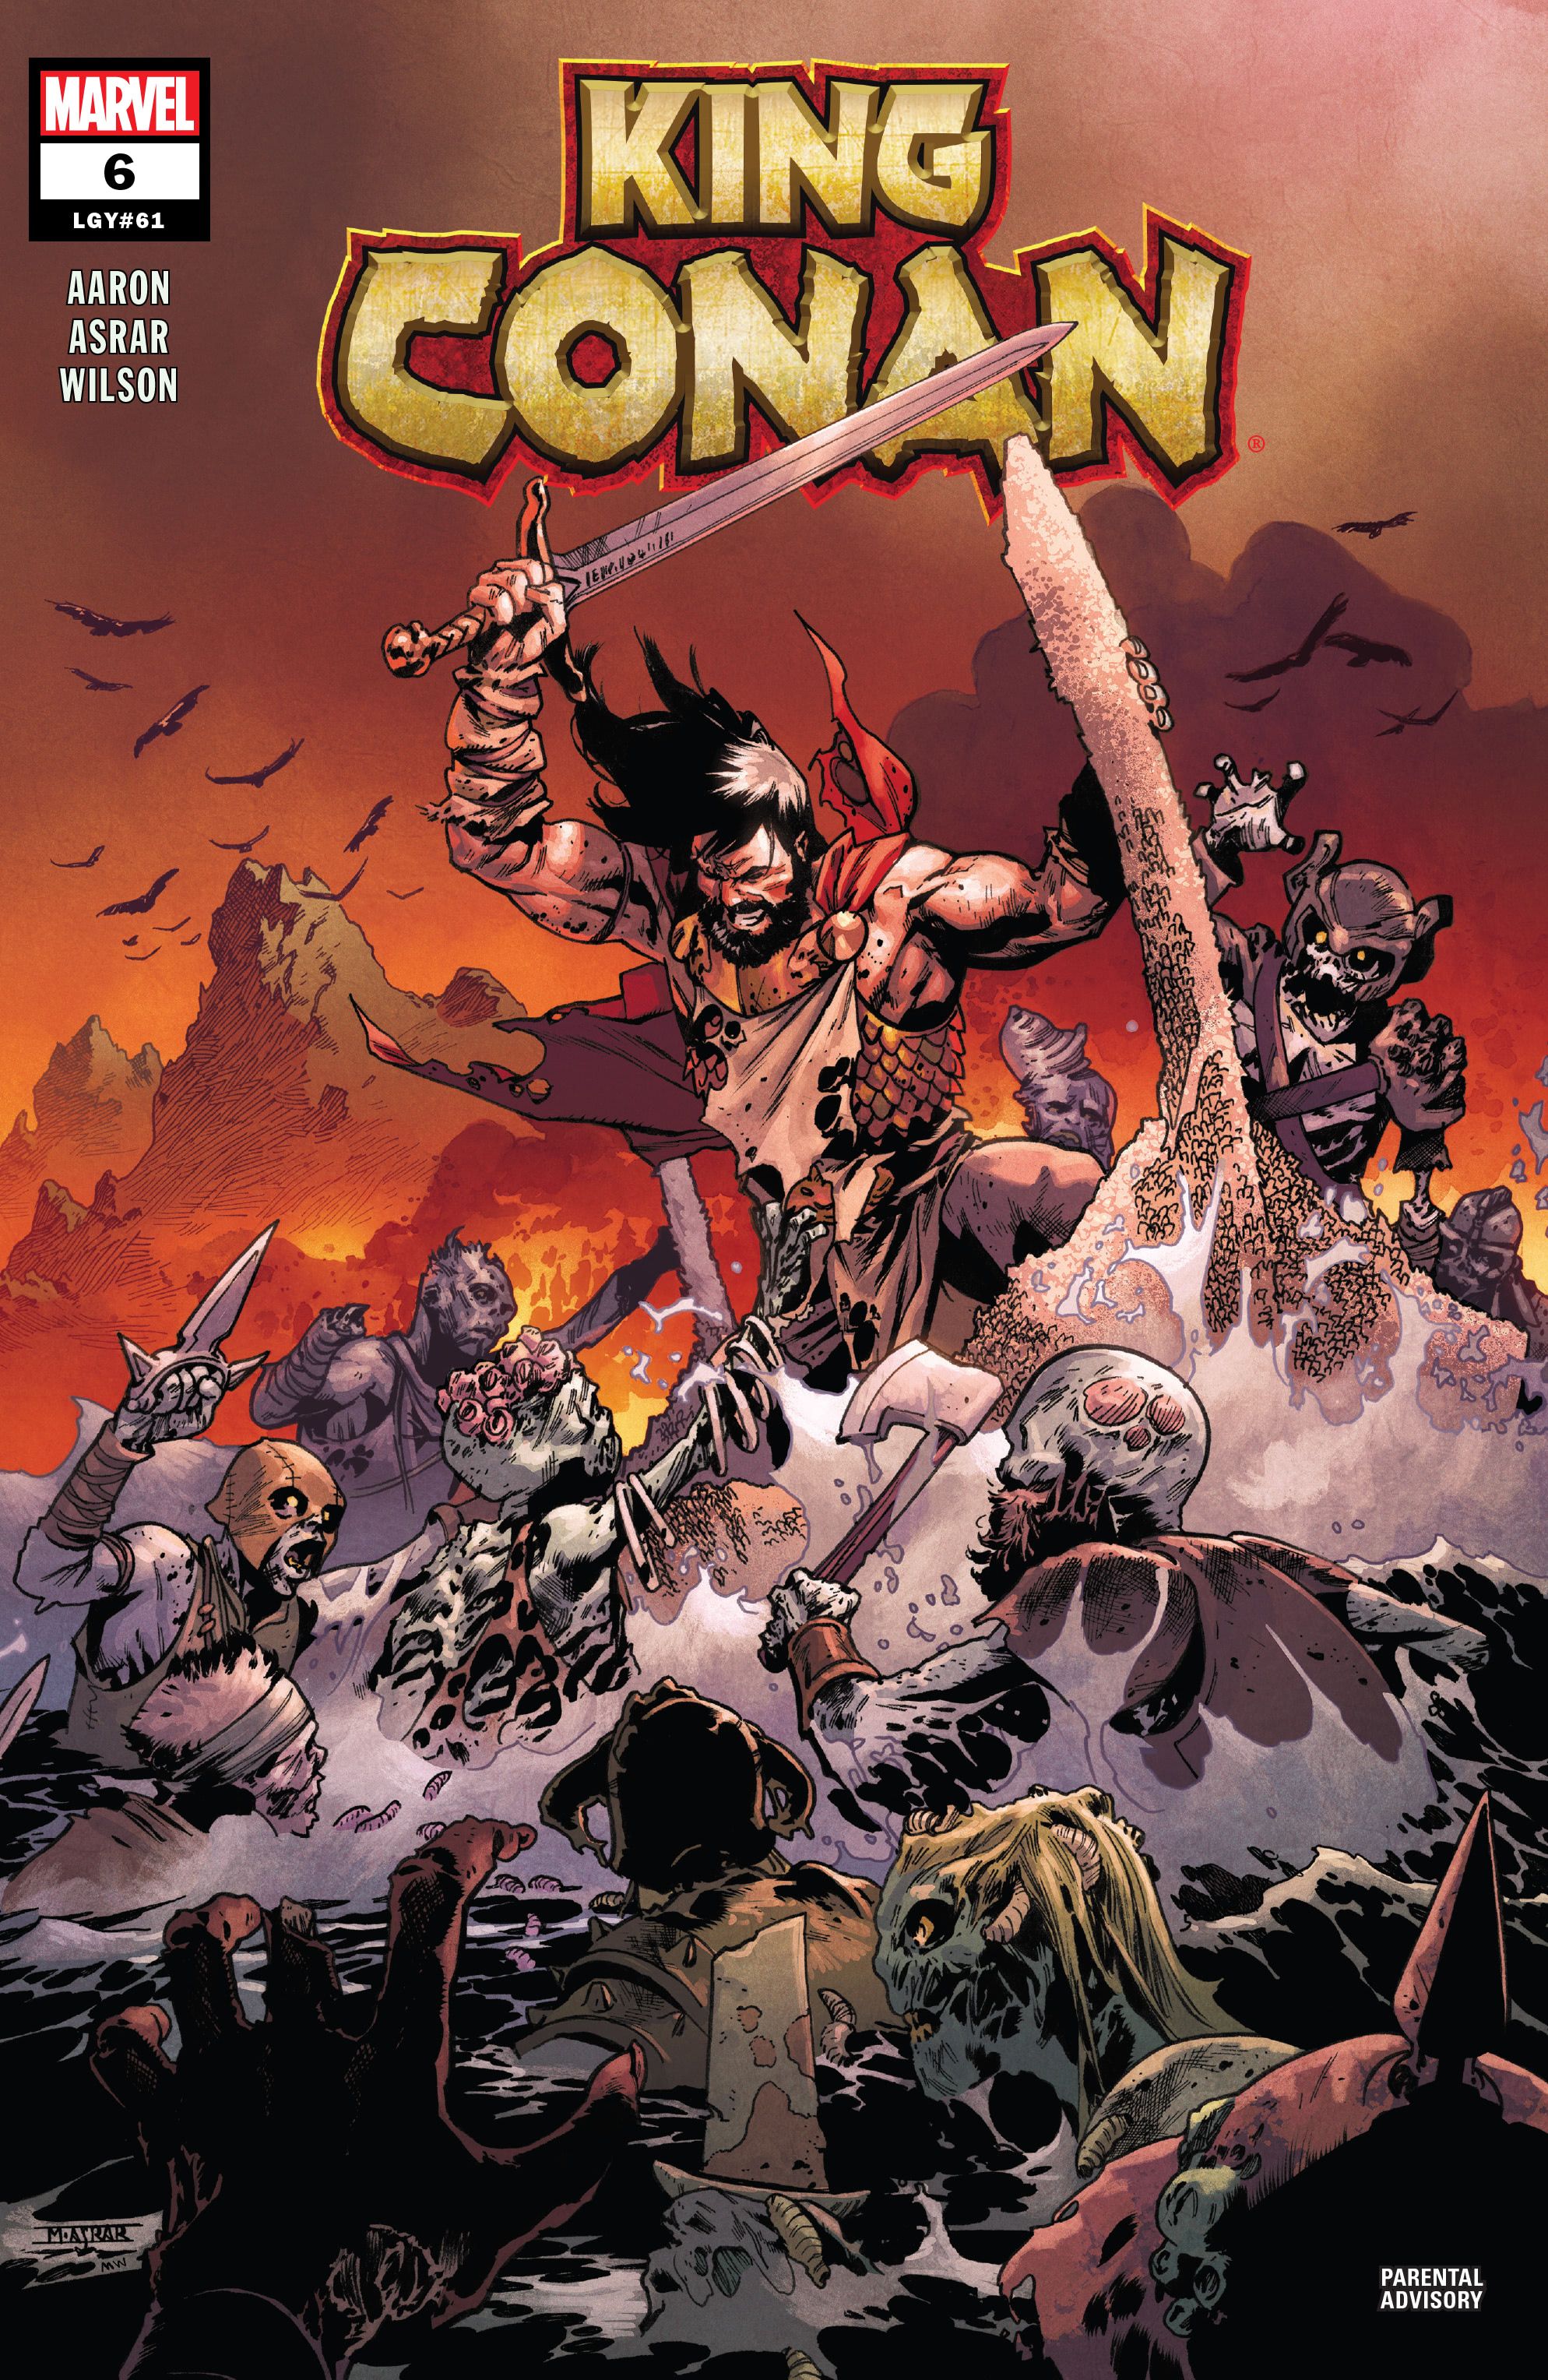 Cover in King Conan #6 